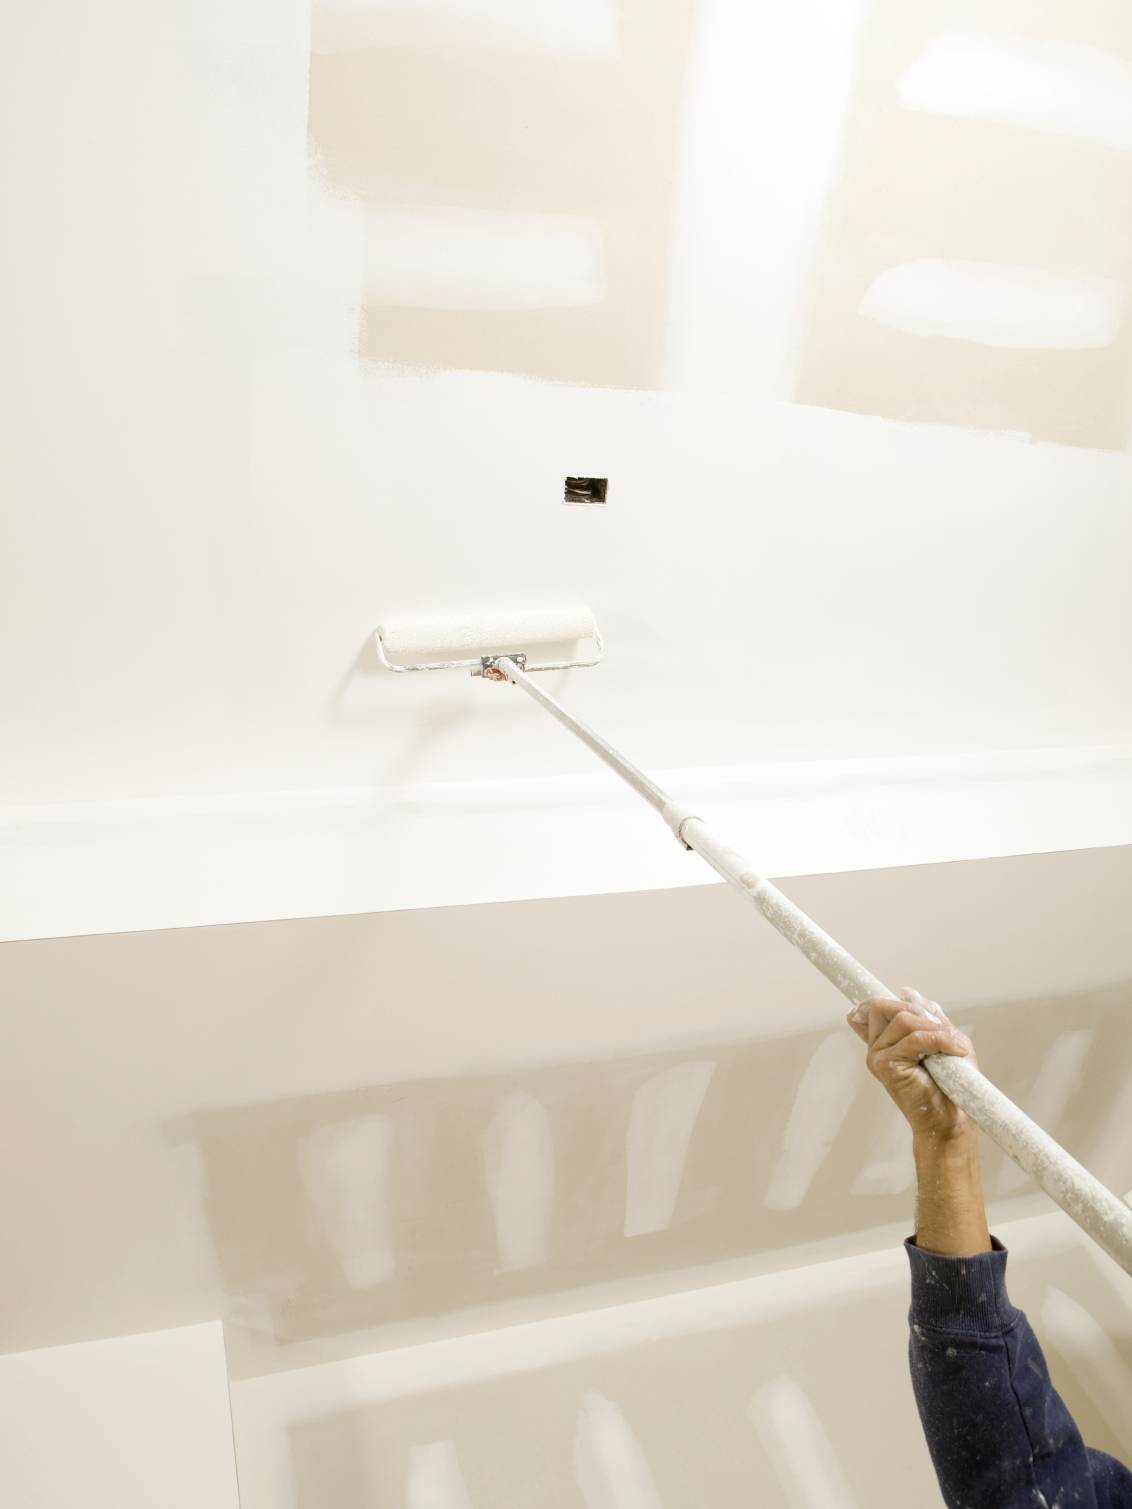 Покраска стен из гипсокартона своими руками: подготовка и отделка